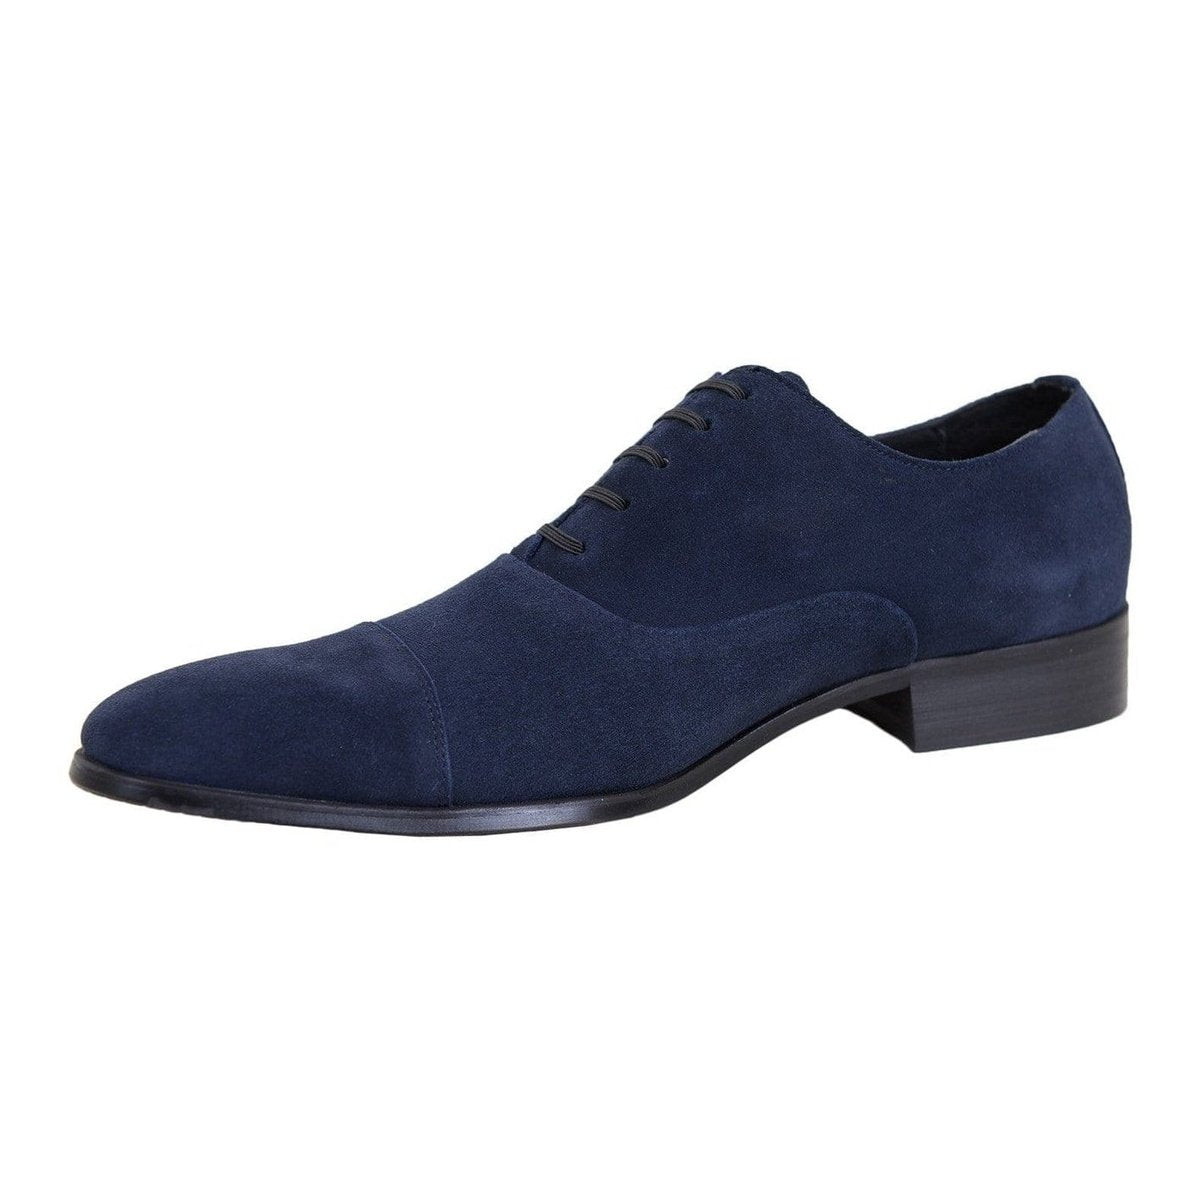 Carrucci Shoes For Amazon Carrucci Mens Navy Blue Suede Cap Toe Oxford Leather Dress Shoes